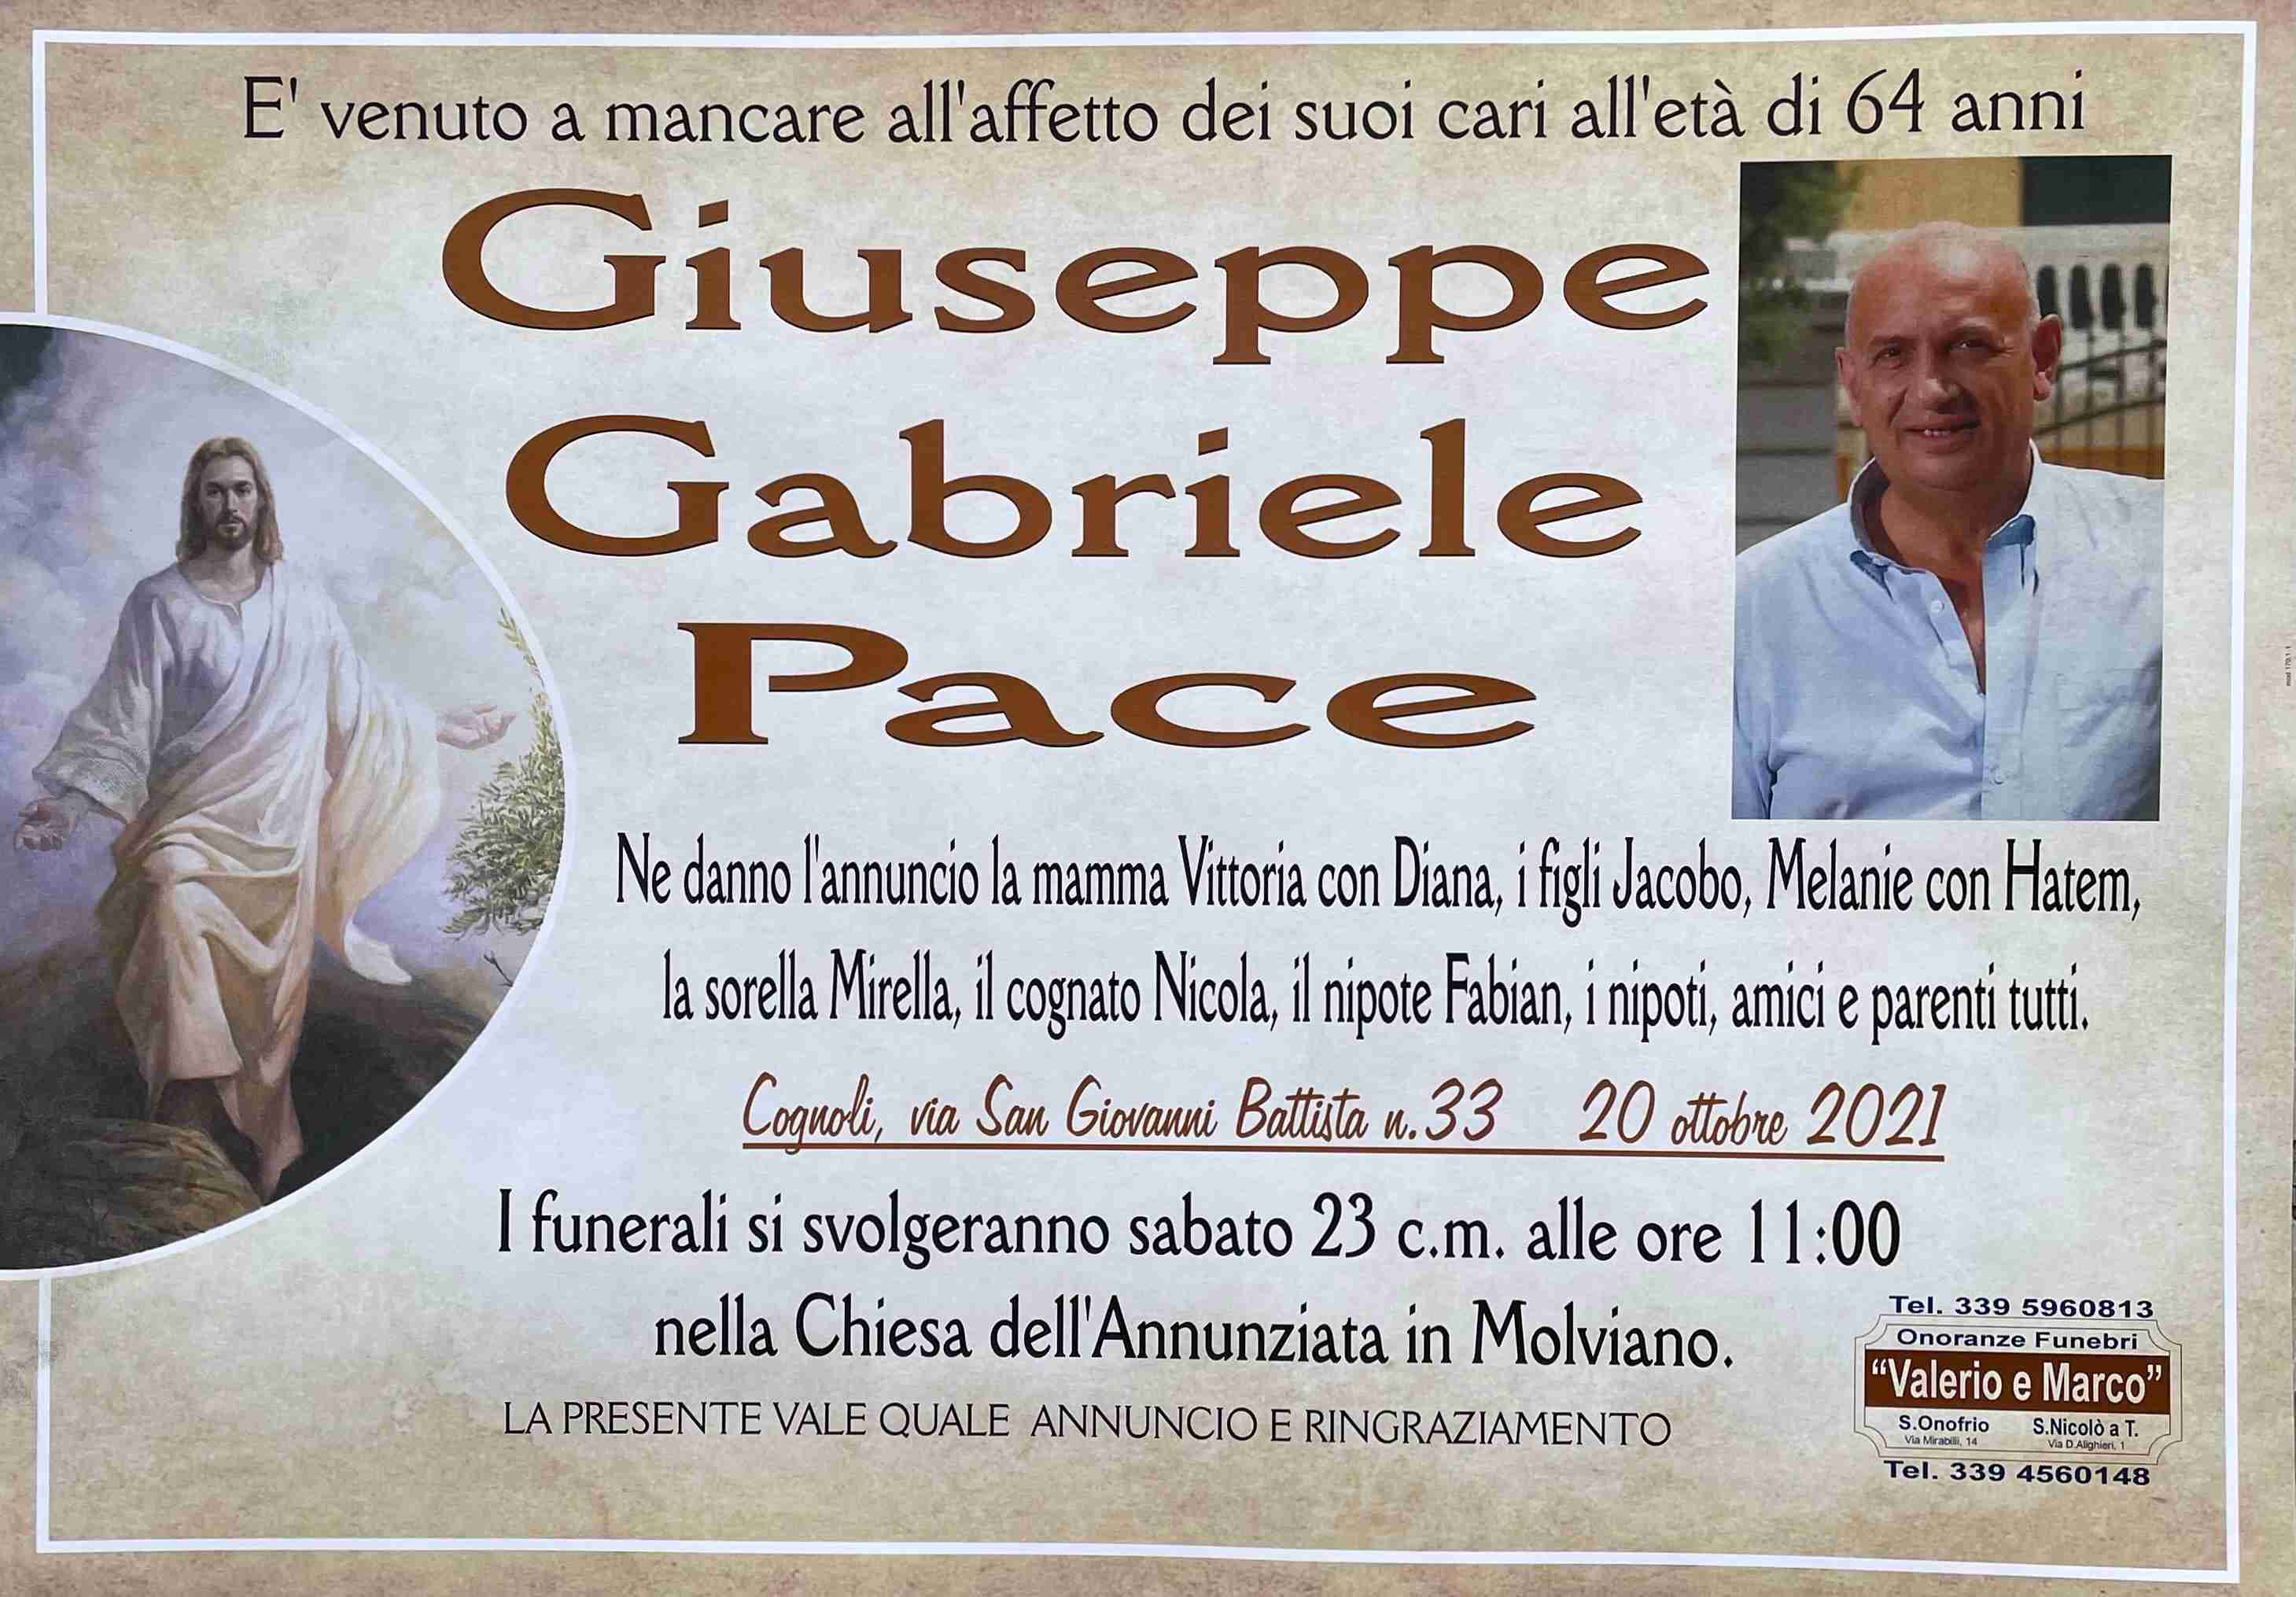 Giuseppe Gabriele